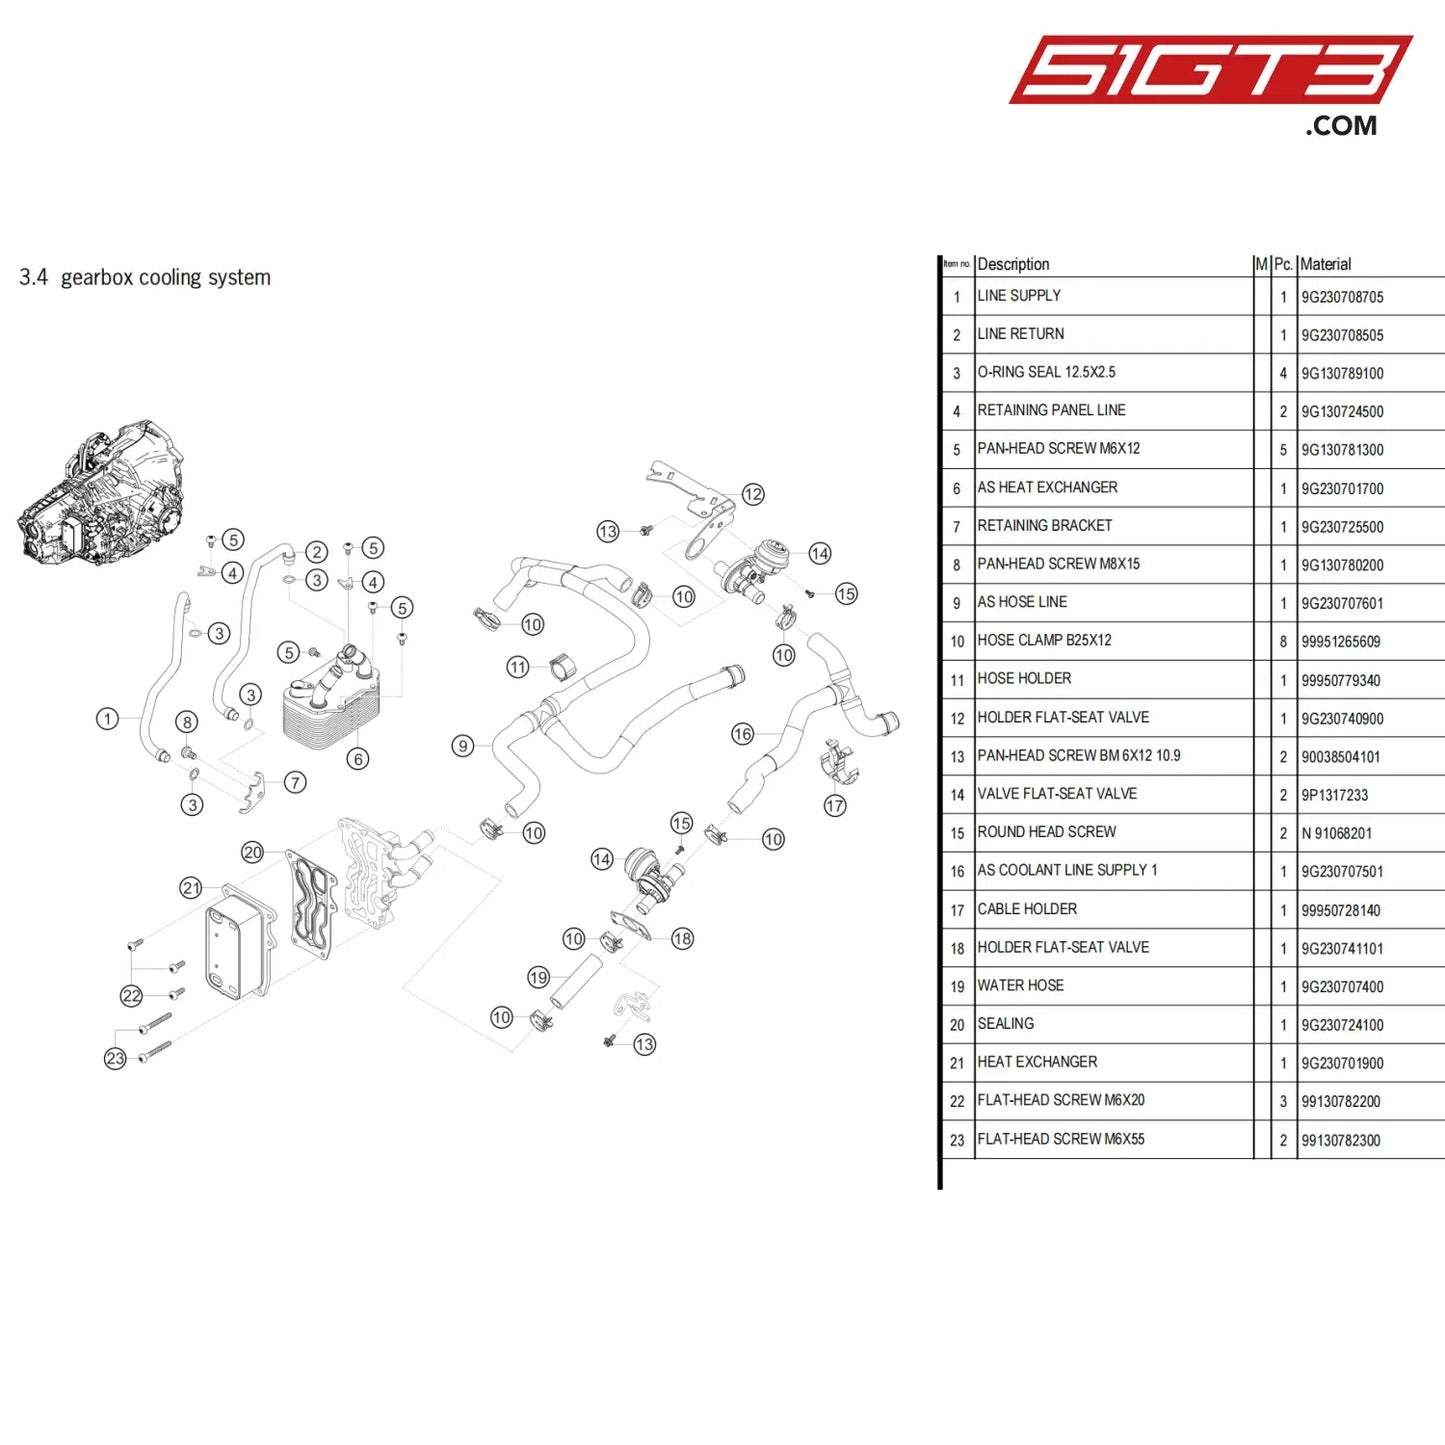 Retaining Panel Line - 9G130724500 [Porsche 718 Cayman Gt4 Clubsport] Gearbox Cooling System